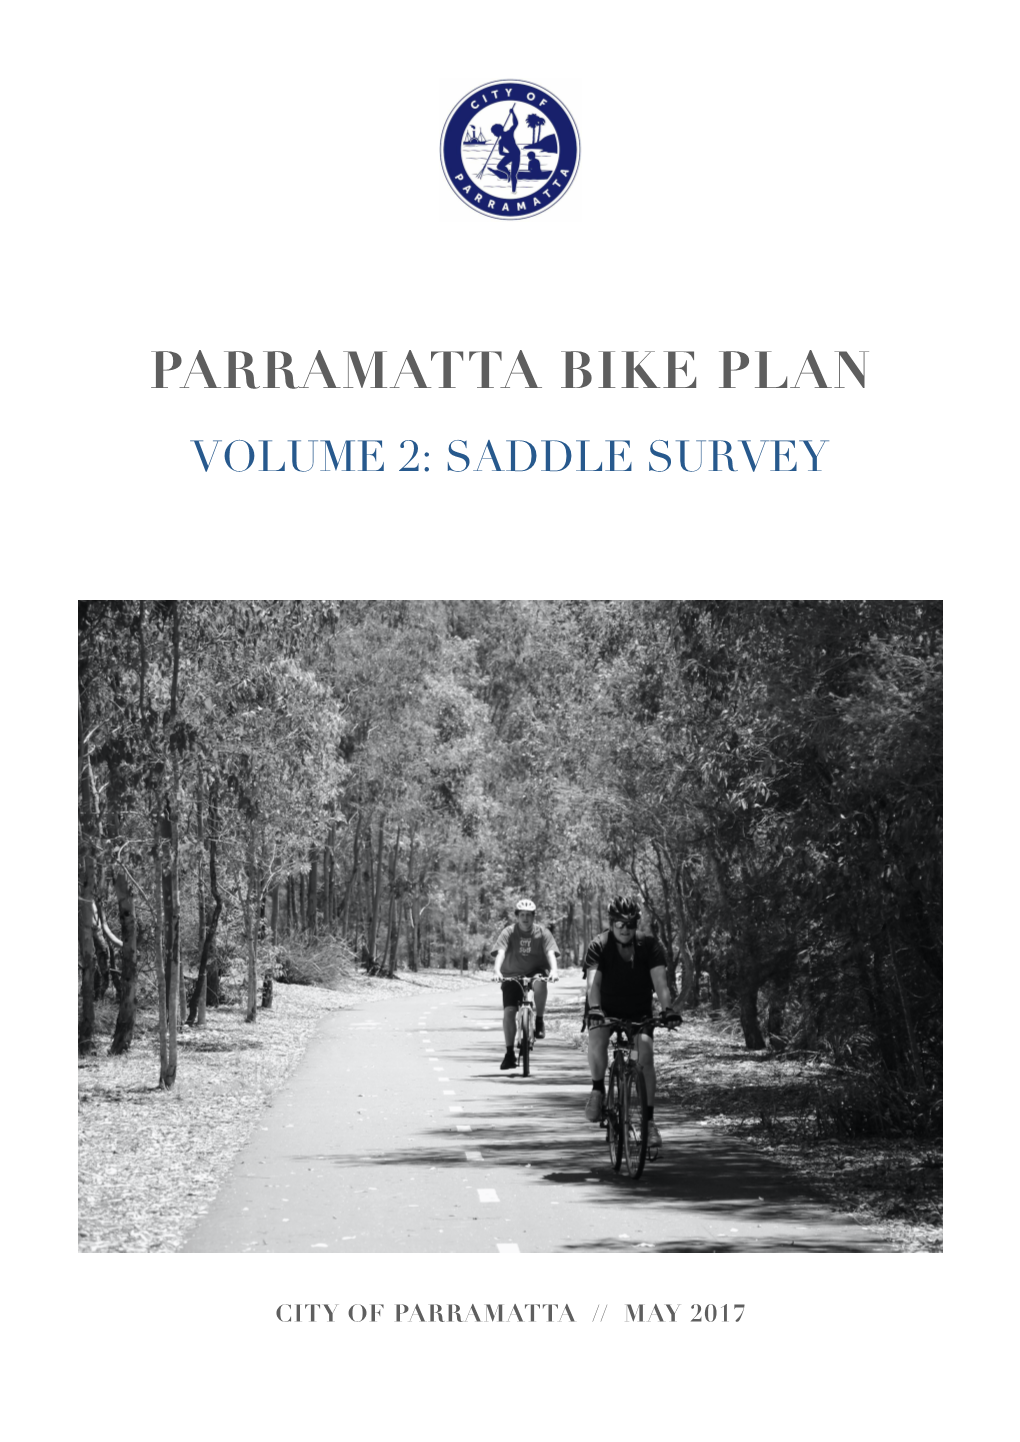 Parramatta Bike Plan Volume 2: Saddle Survey